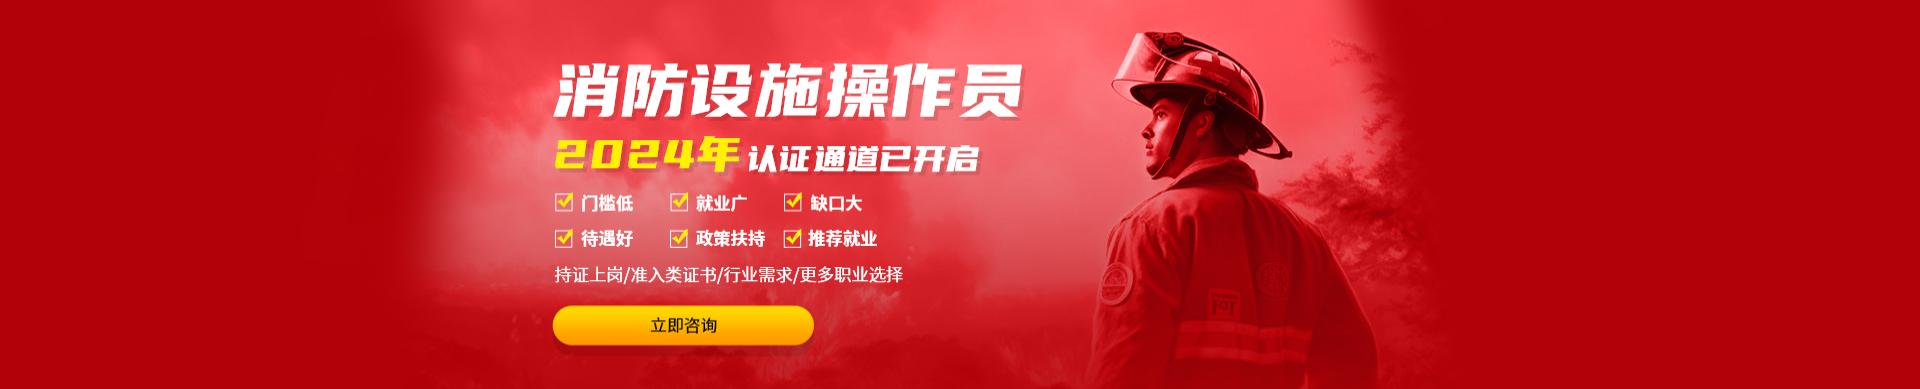 PC-首页-消防设施操作员banner